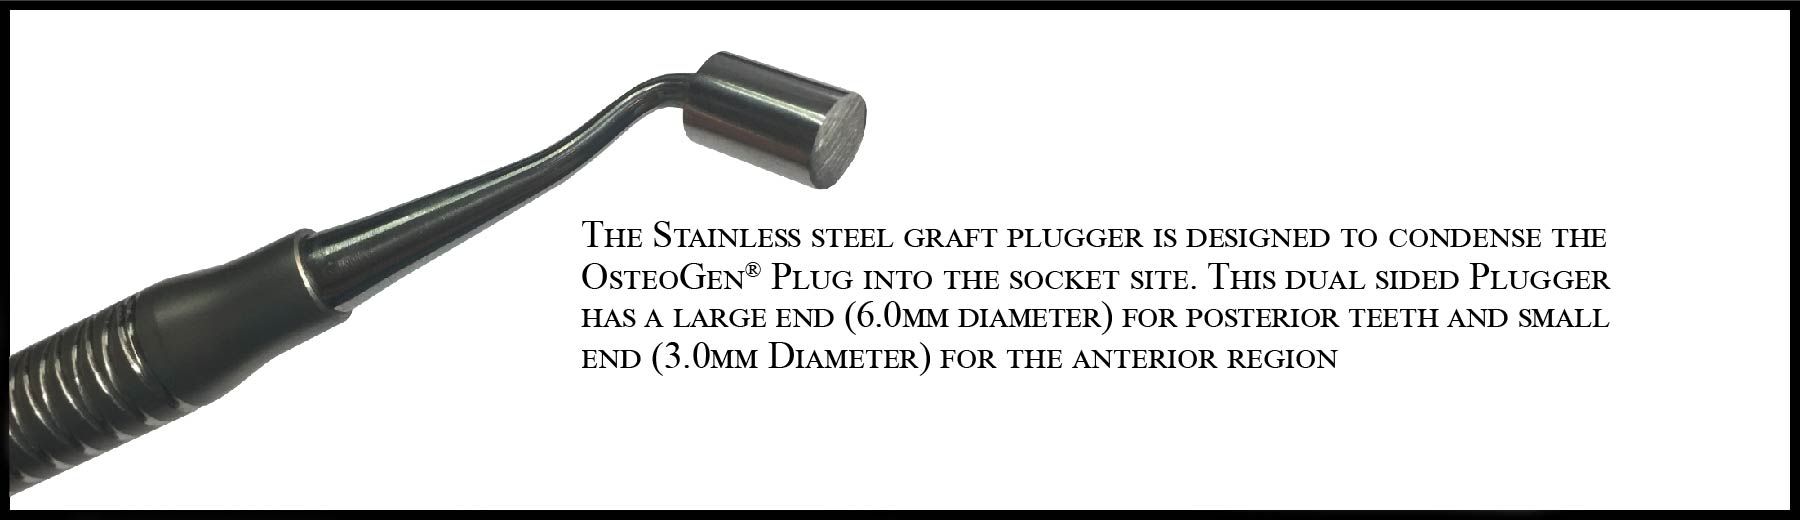 OsteoGen Plug Stainless Steel Plugger